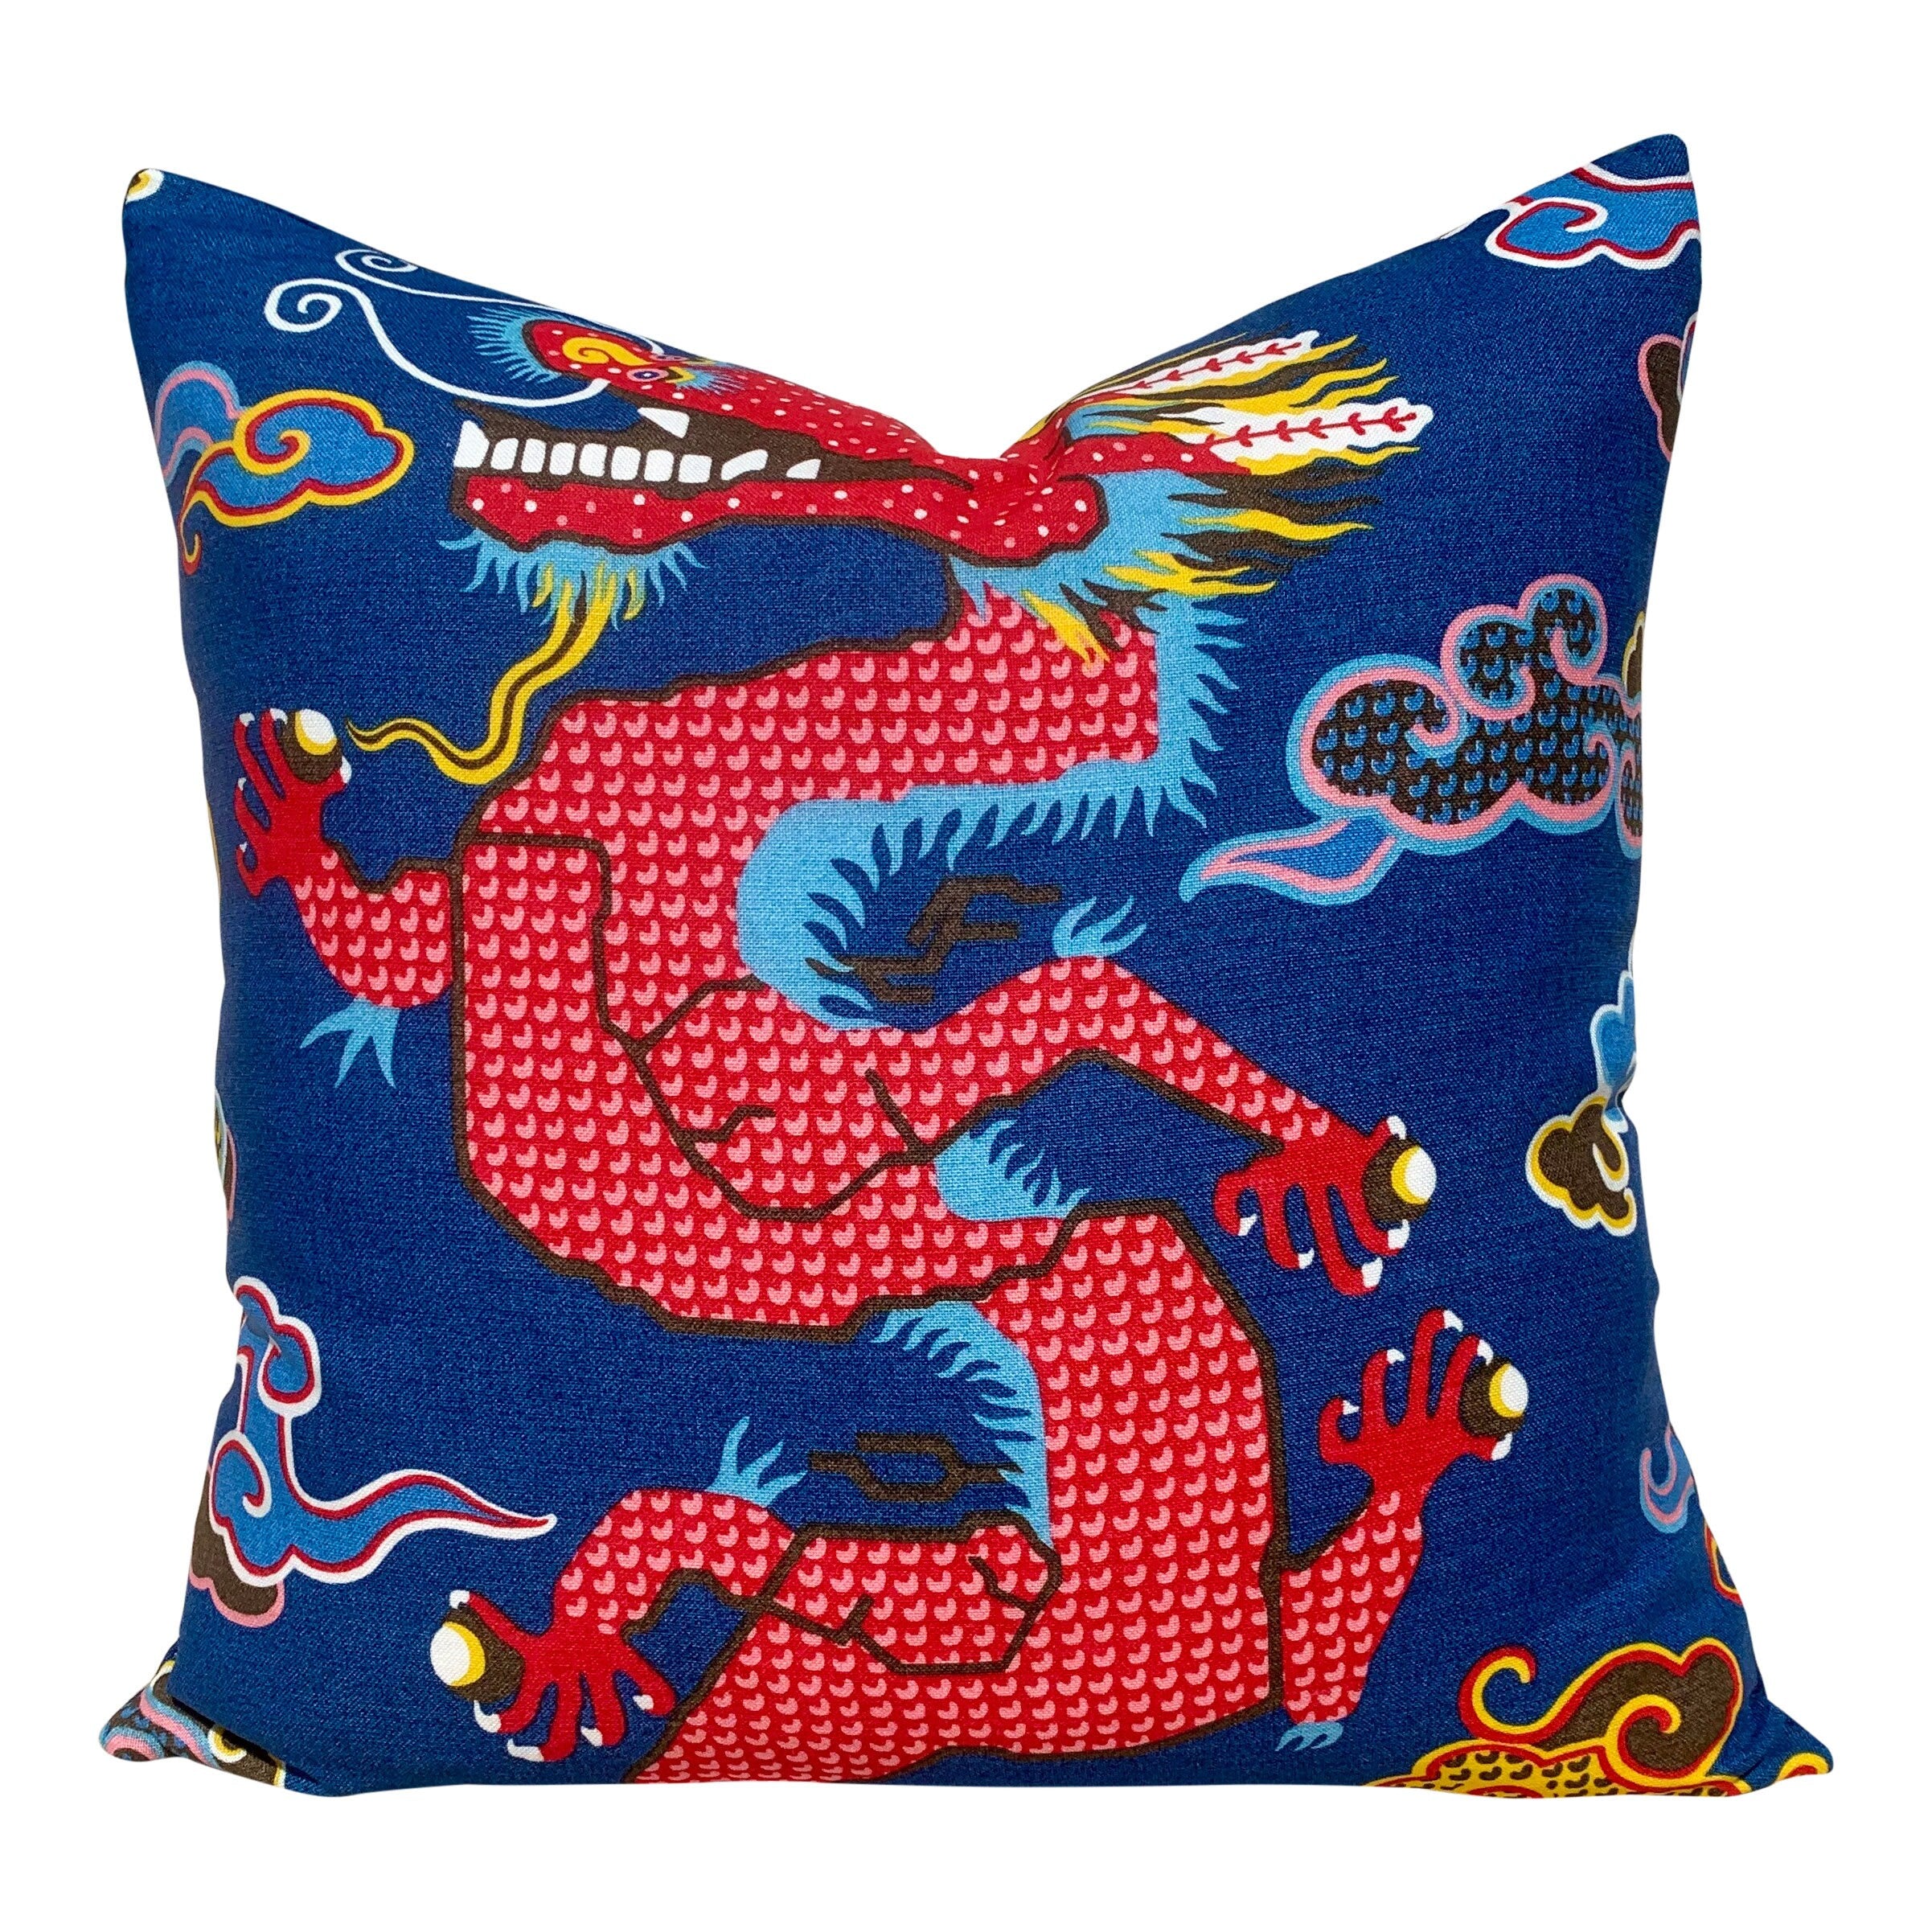 Schumacher Magical Ming Dragon Pillow, Red, Blue. Decorative pillow.Designer pillows, accent cushion cover, high end pillow